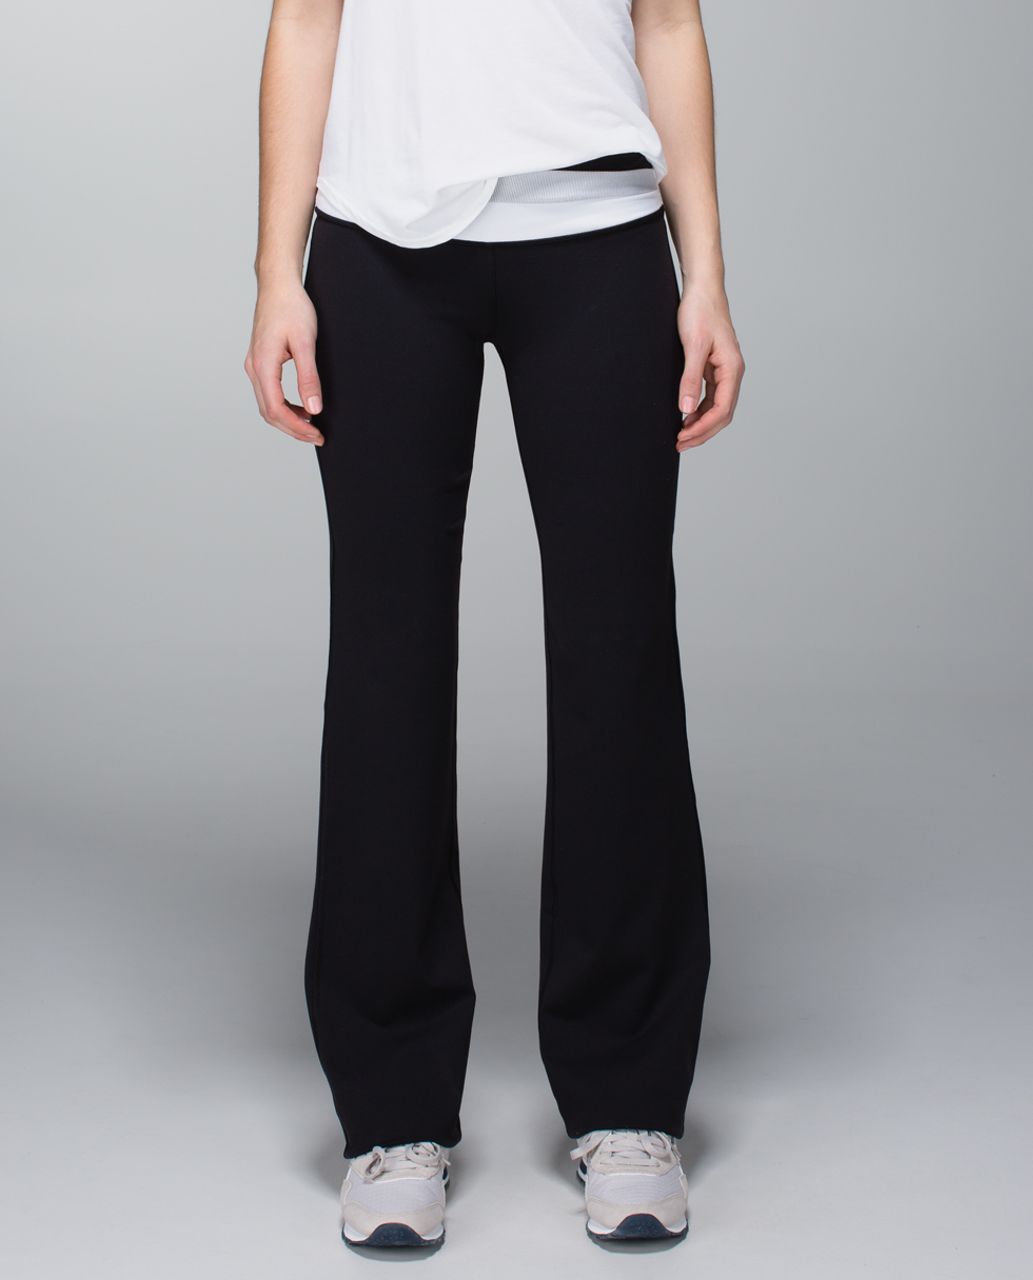 Lululemon Astro Pant (Regular) *Full-On Luon - Black / Wee Stripe White Heathered Medium Grey / White